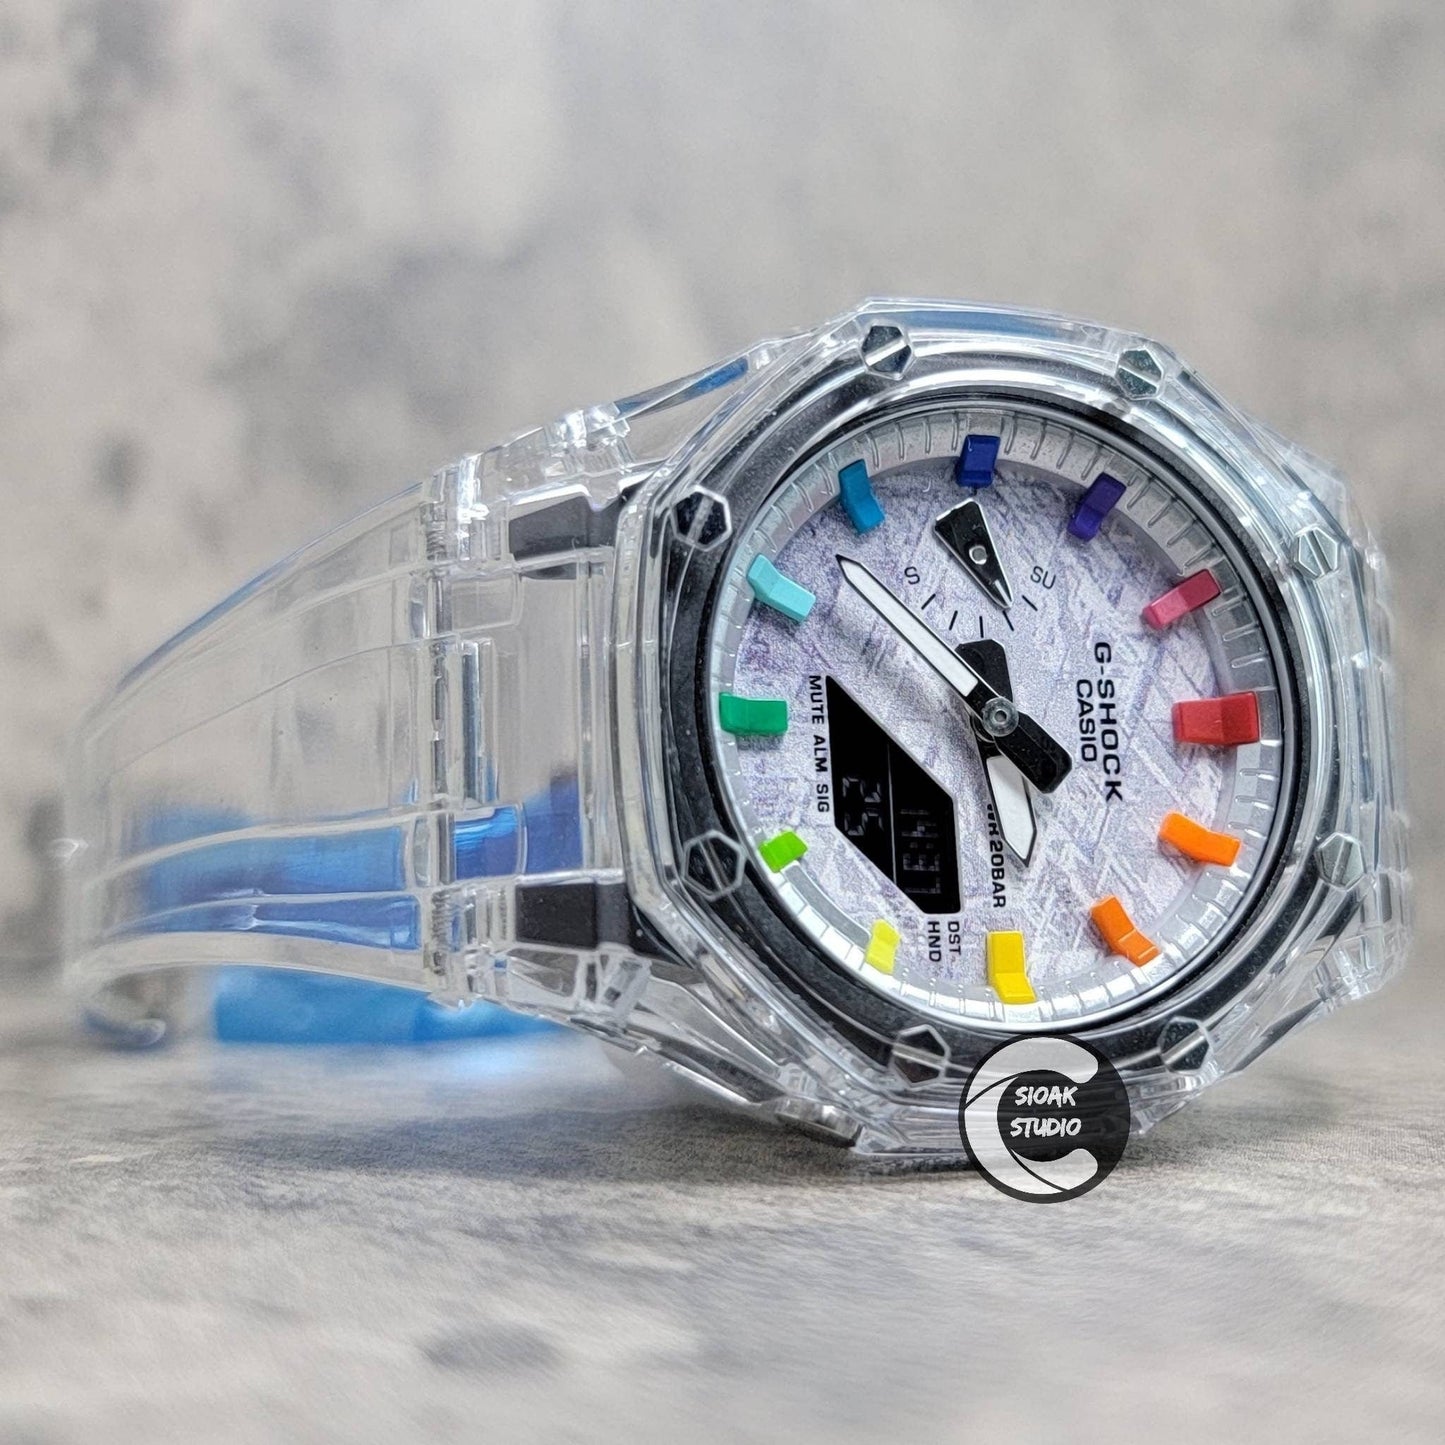 Casioak Mod Watch Transparent Case Strap Silver Rainbow Time Mark Meteorite Dial 44mm - Casioak Studio